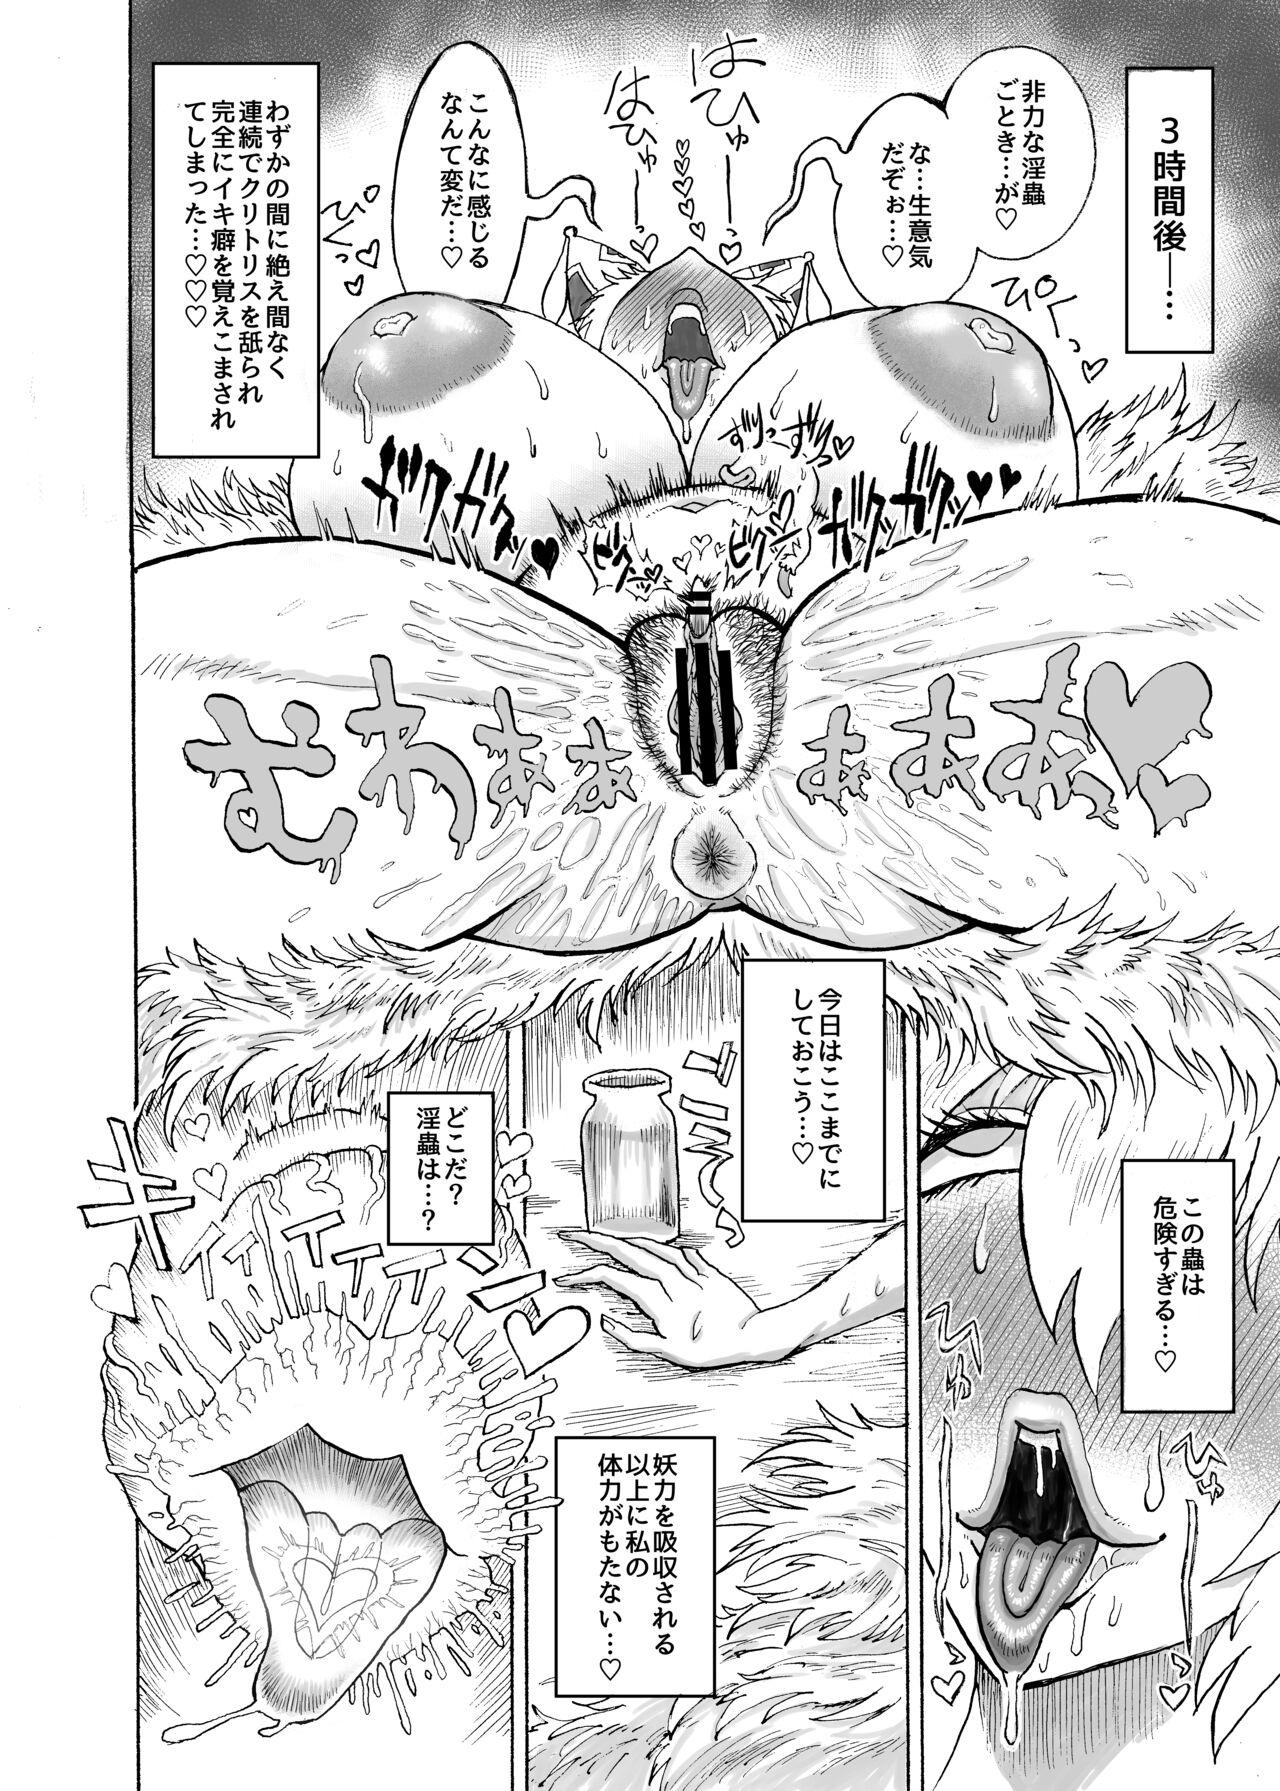 Sentando Yakumo Ran VS Semen sucking worm - Touhou project Blackmail - Page 7